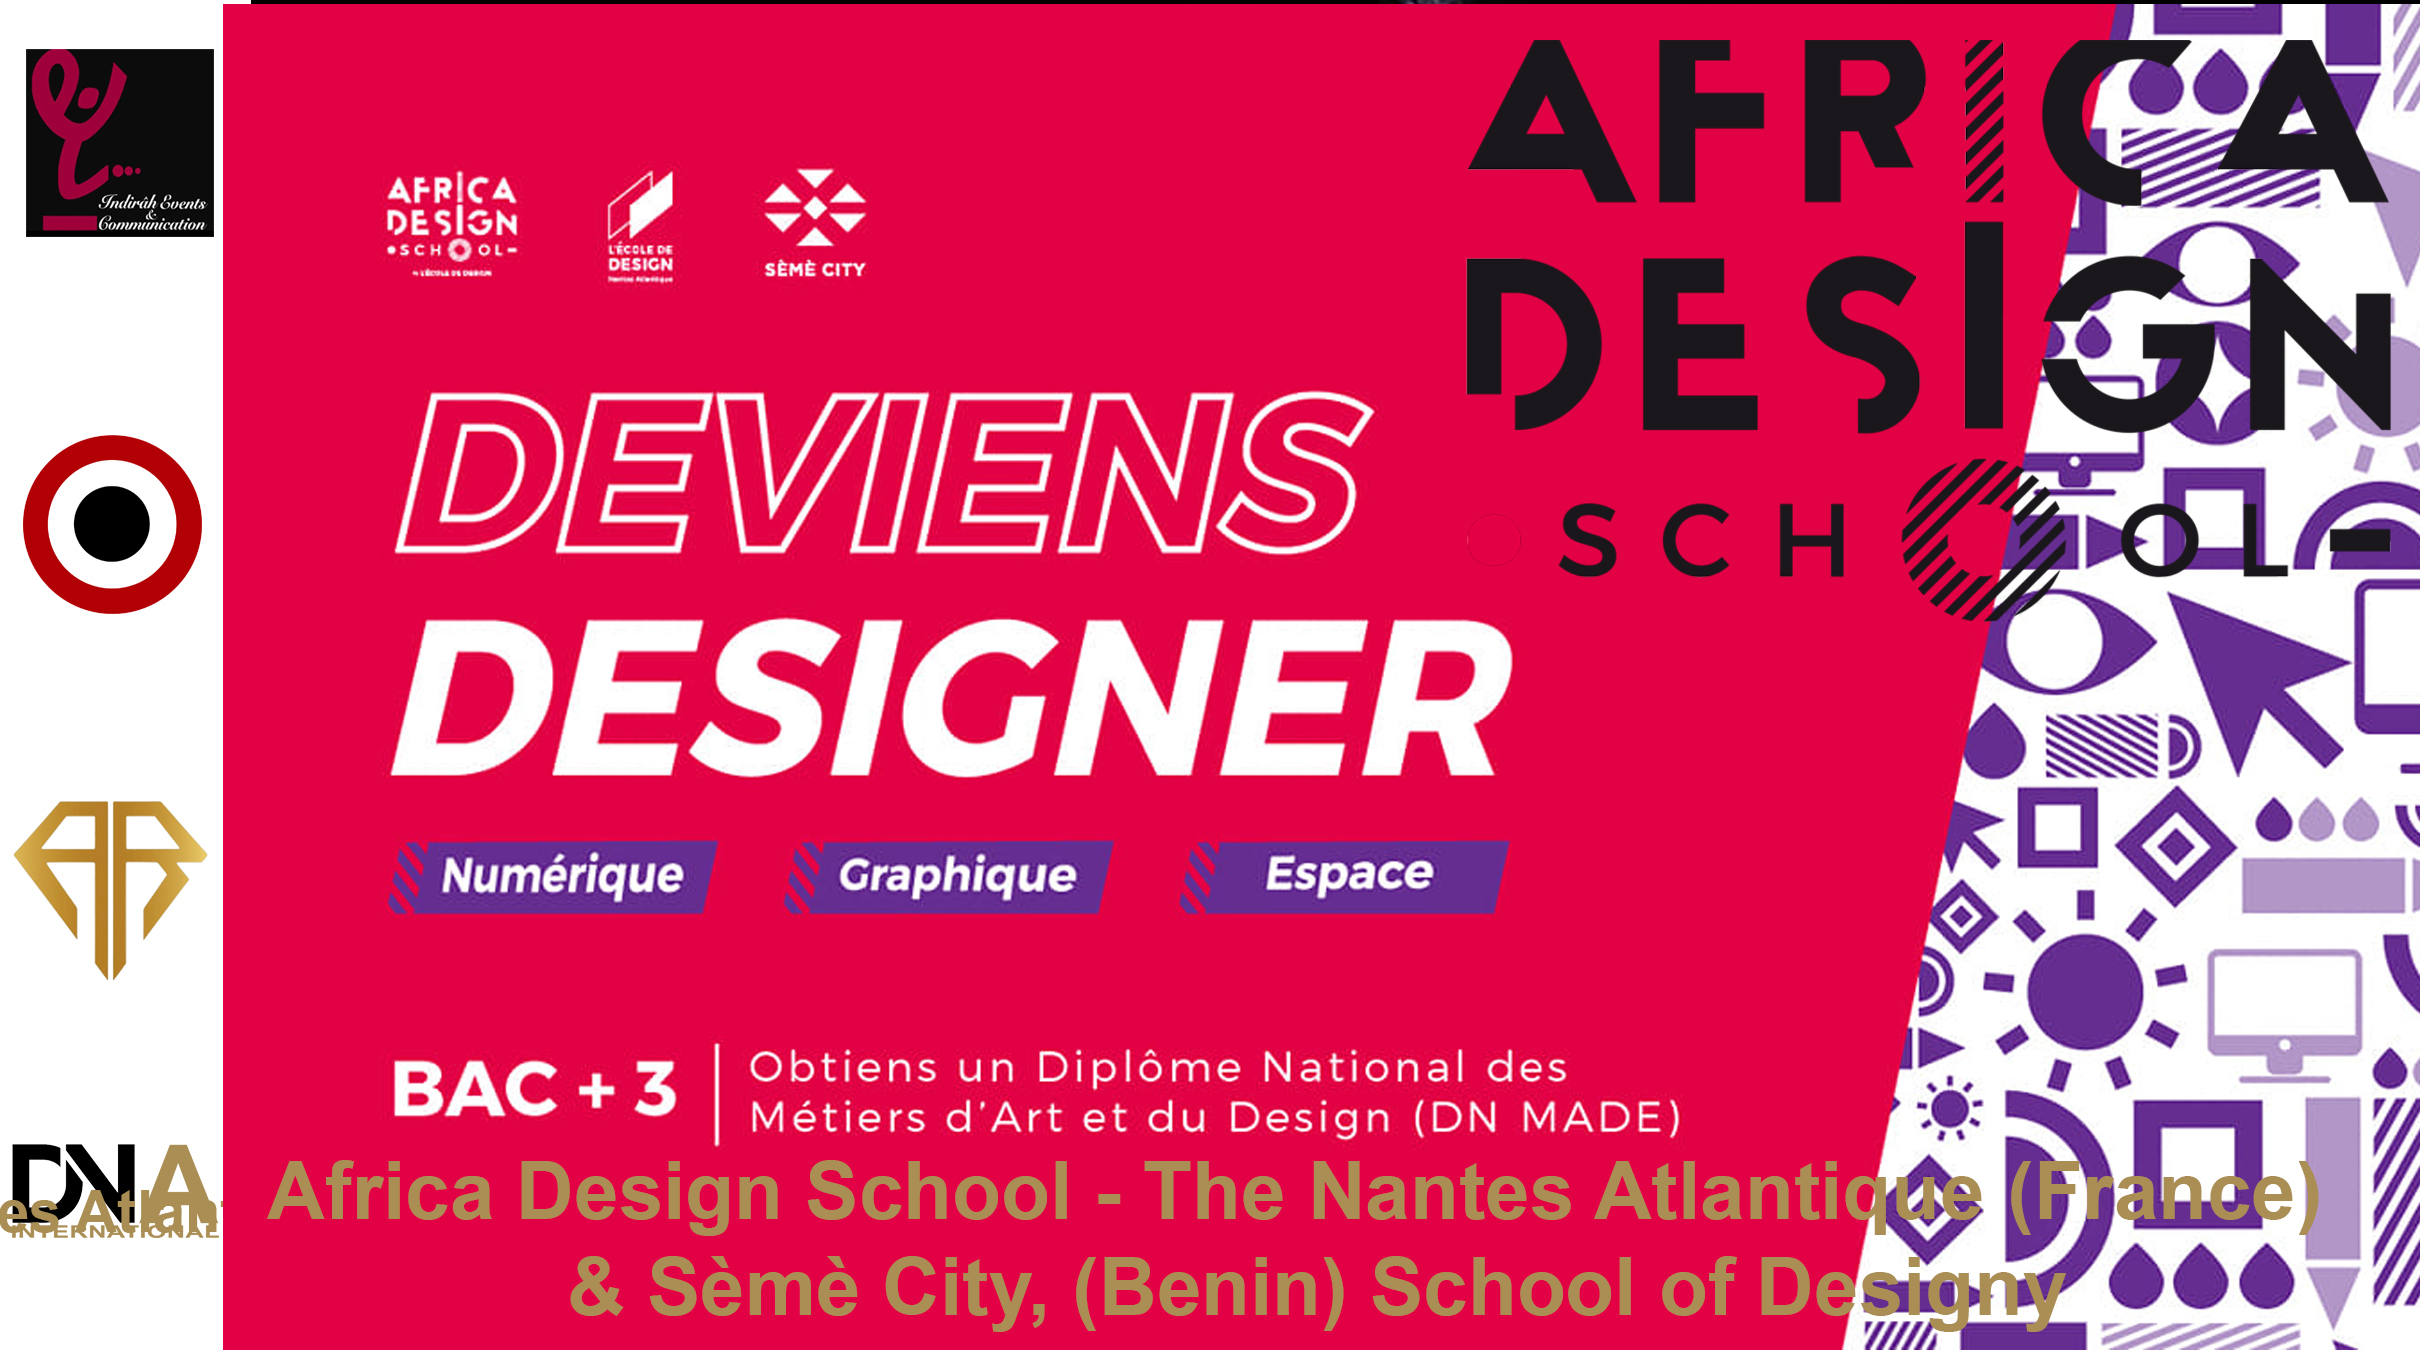 AFRICA-VOGUE-COVER-Africa-Design-School-The-Nantes-Atlantique-France -Sèmè-City,-Benin-School-of-Design-DN-AFRICA-Media-Partner